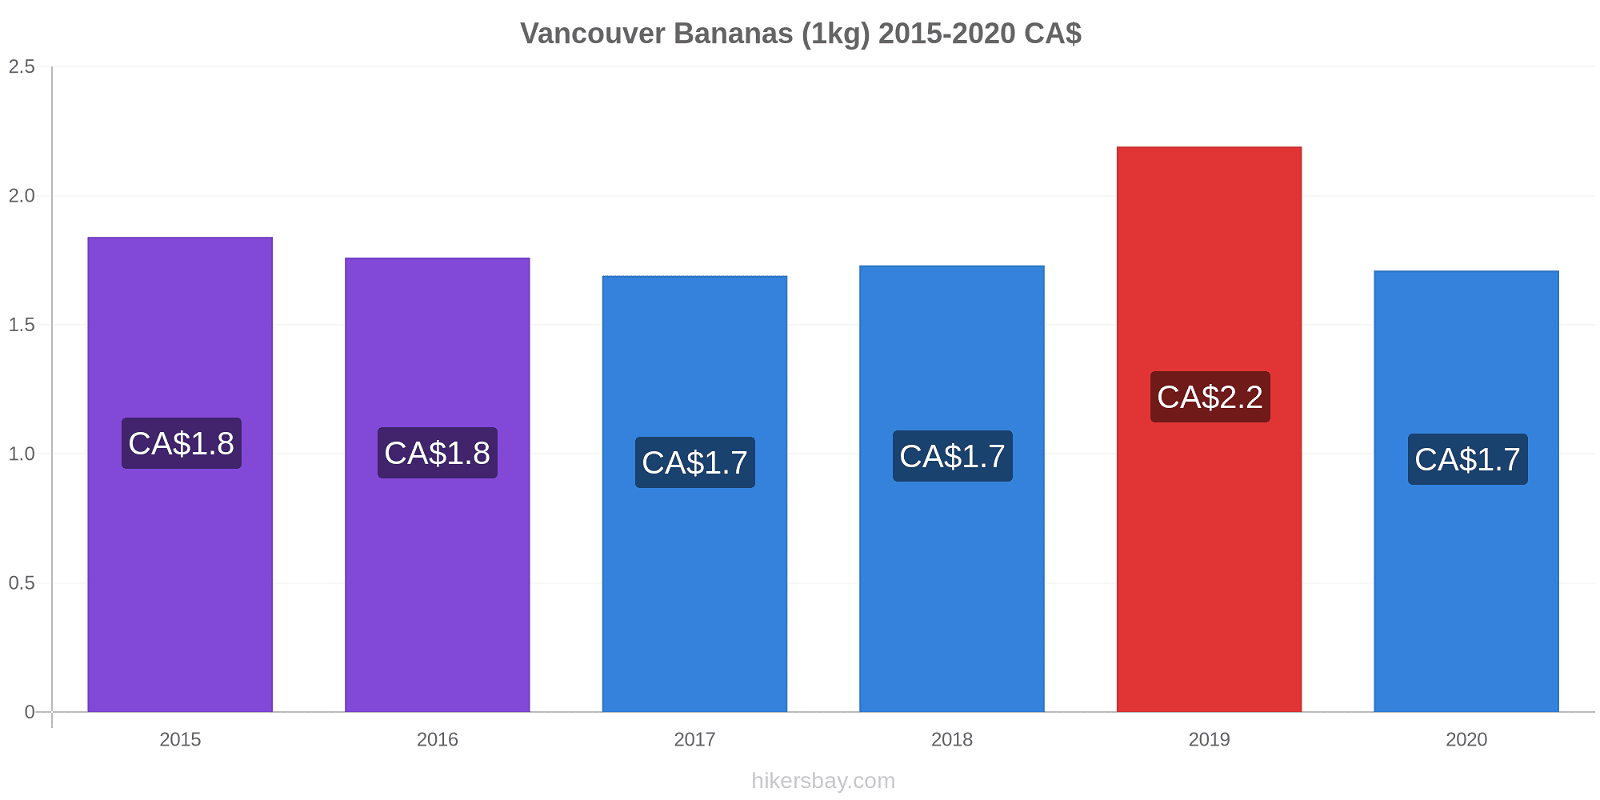 Vancouver price changes Bananas (1kg) hikersbay.com